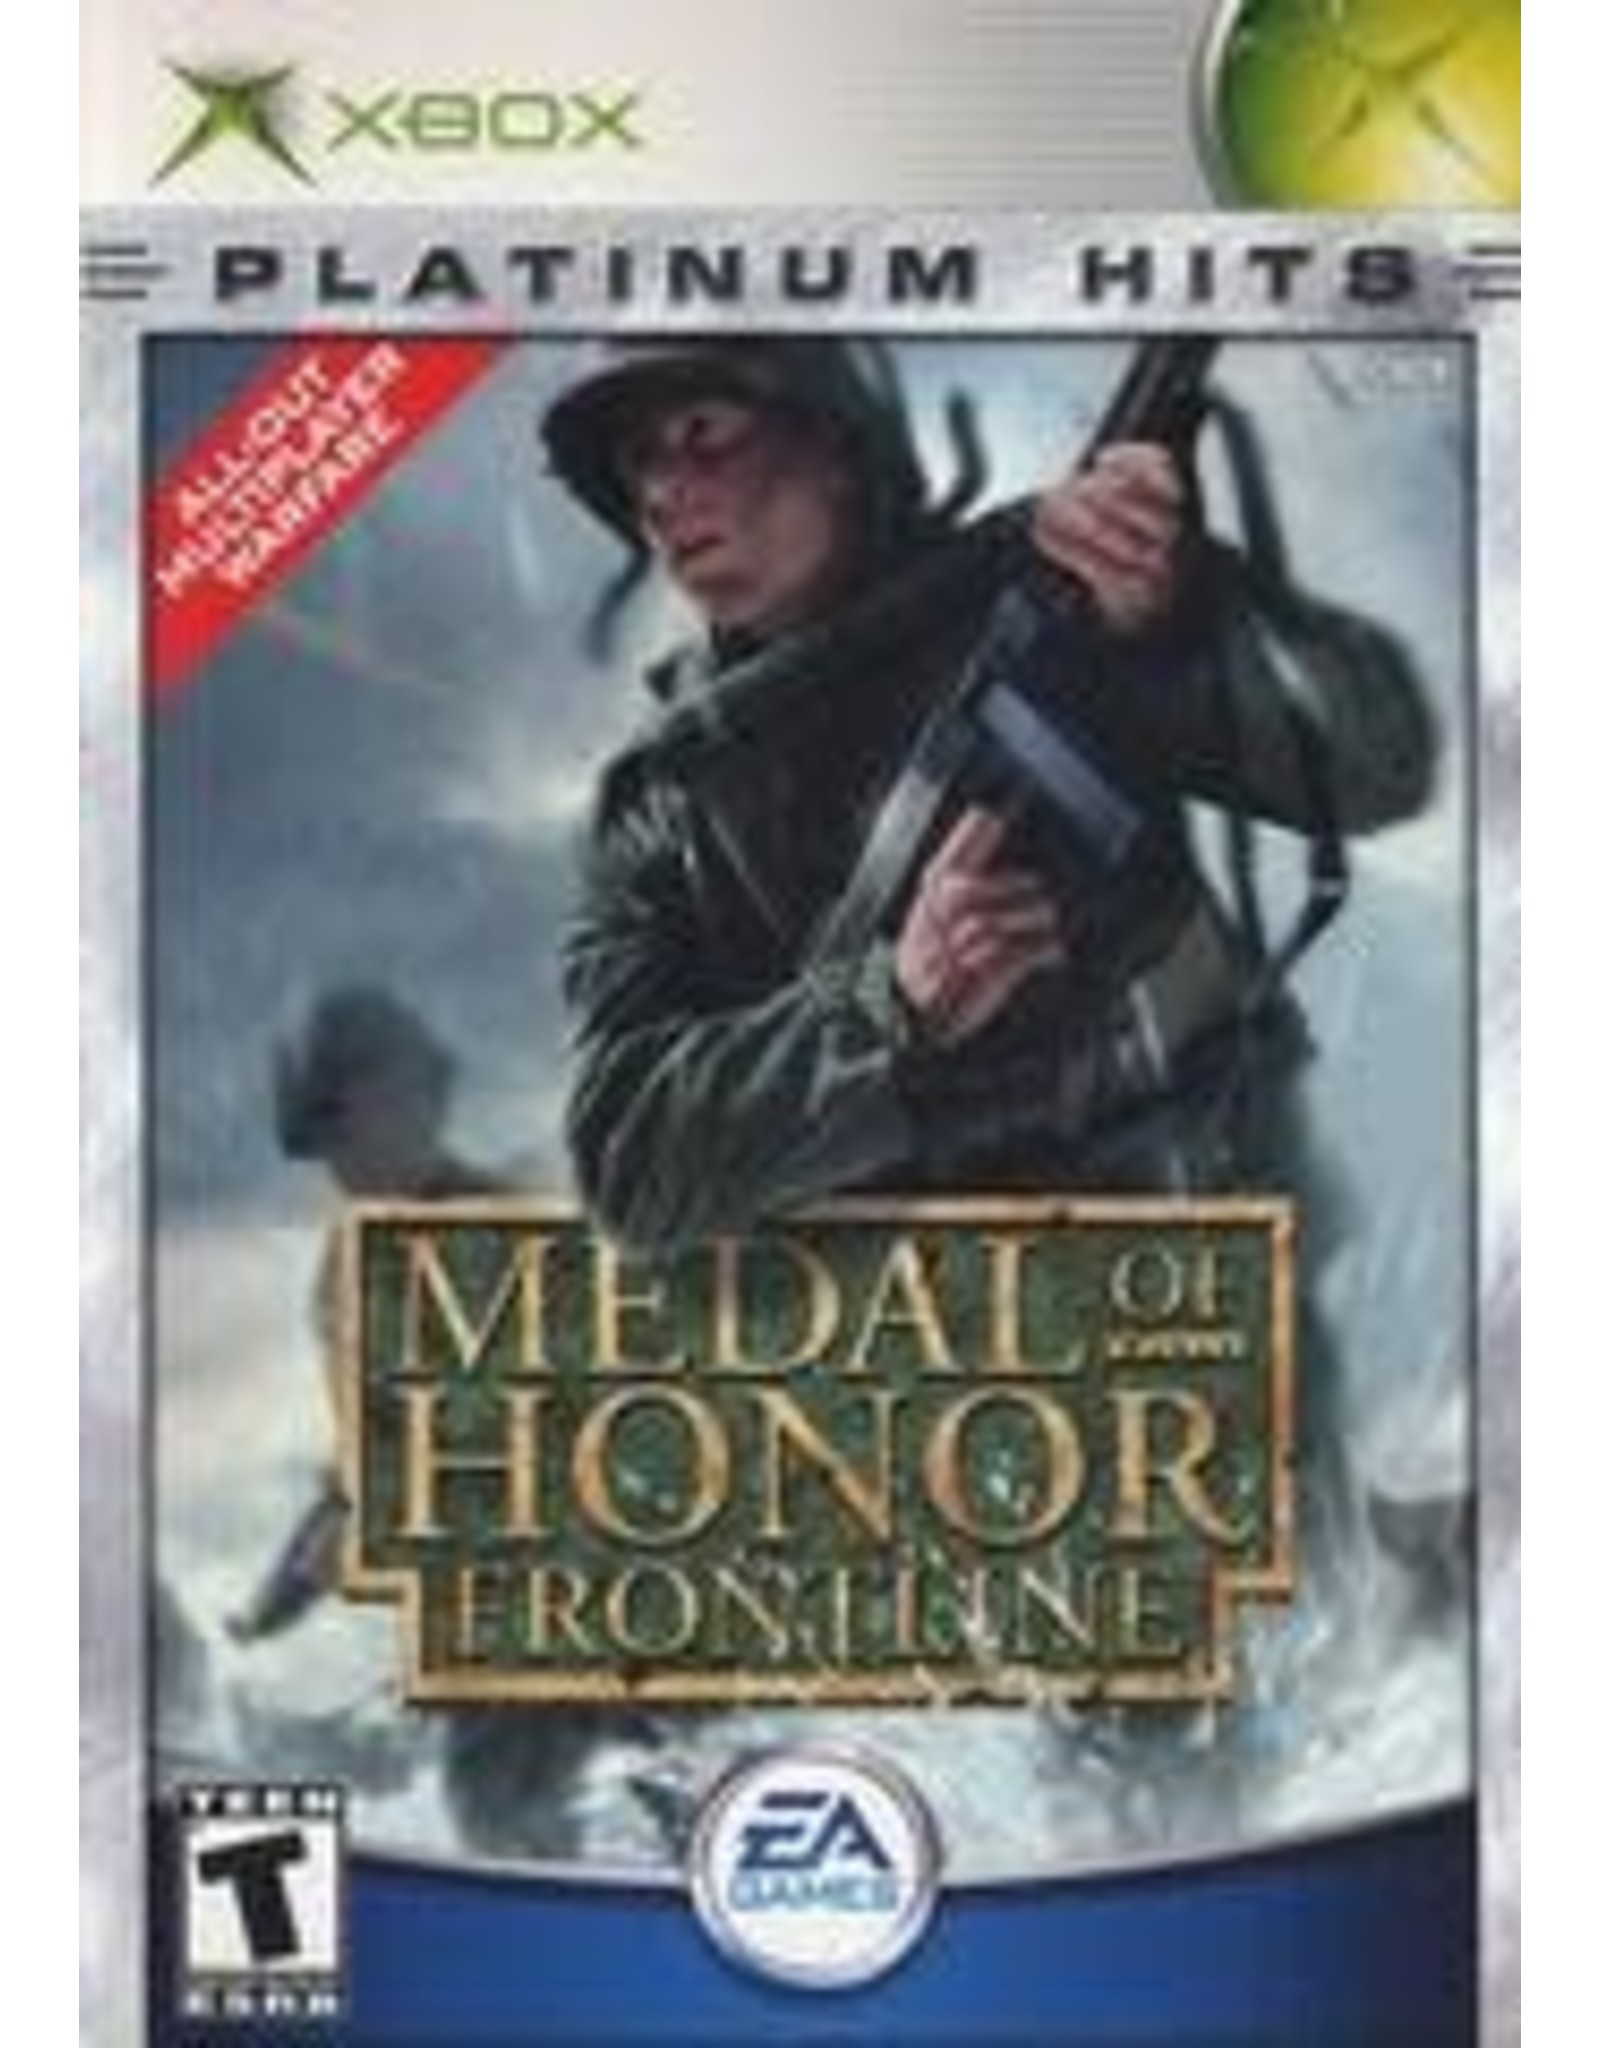 Xbox Medal of Honor Frontline (Platinum Hits, No Manual)